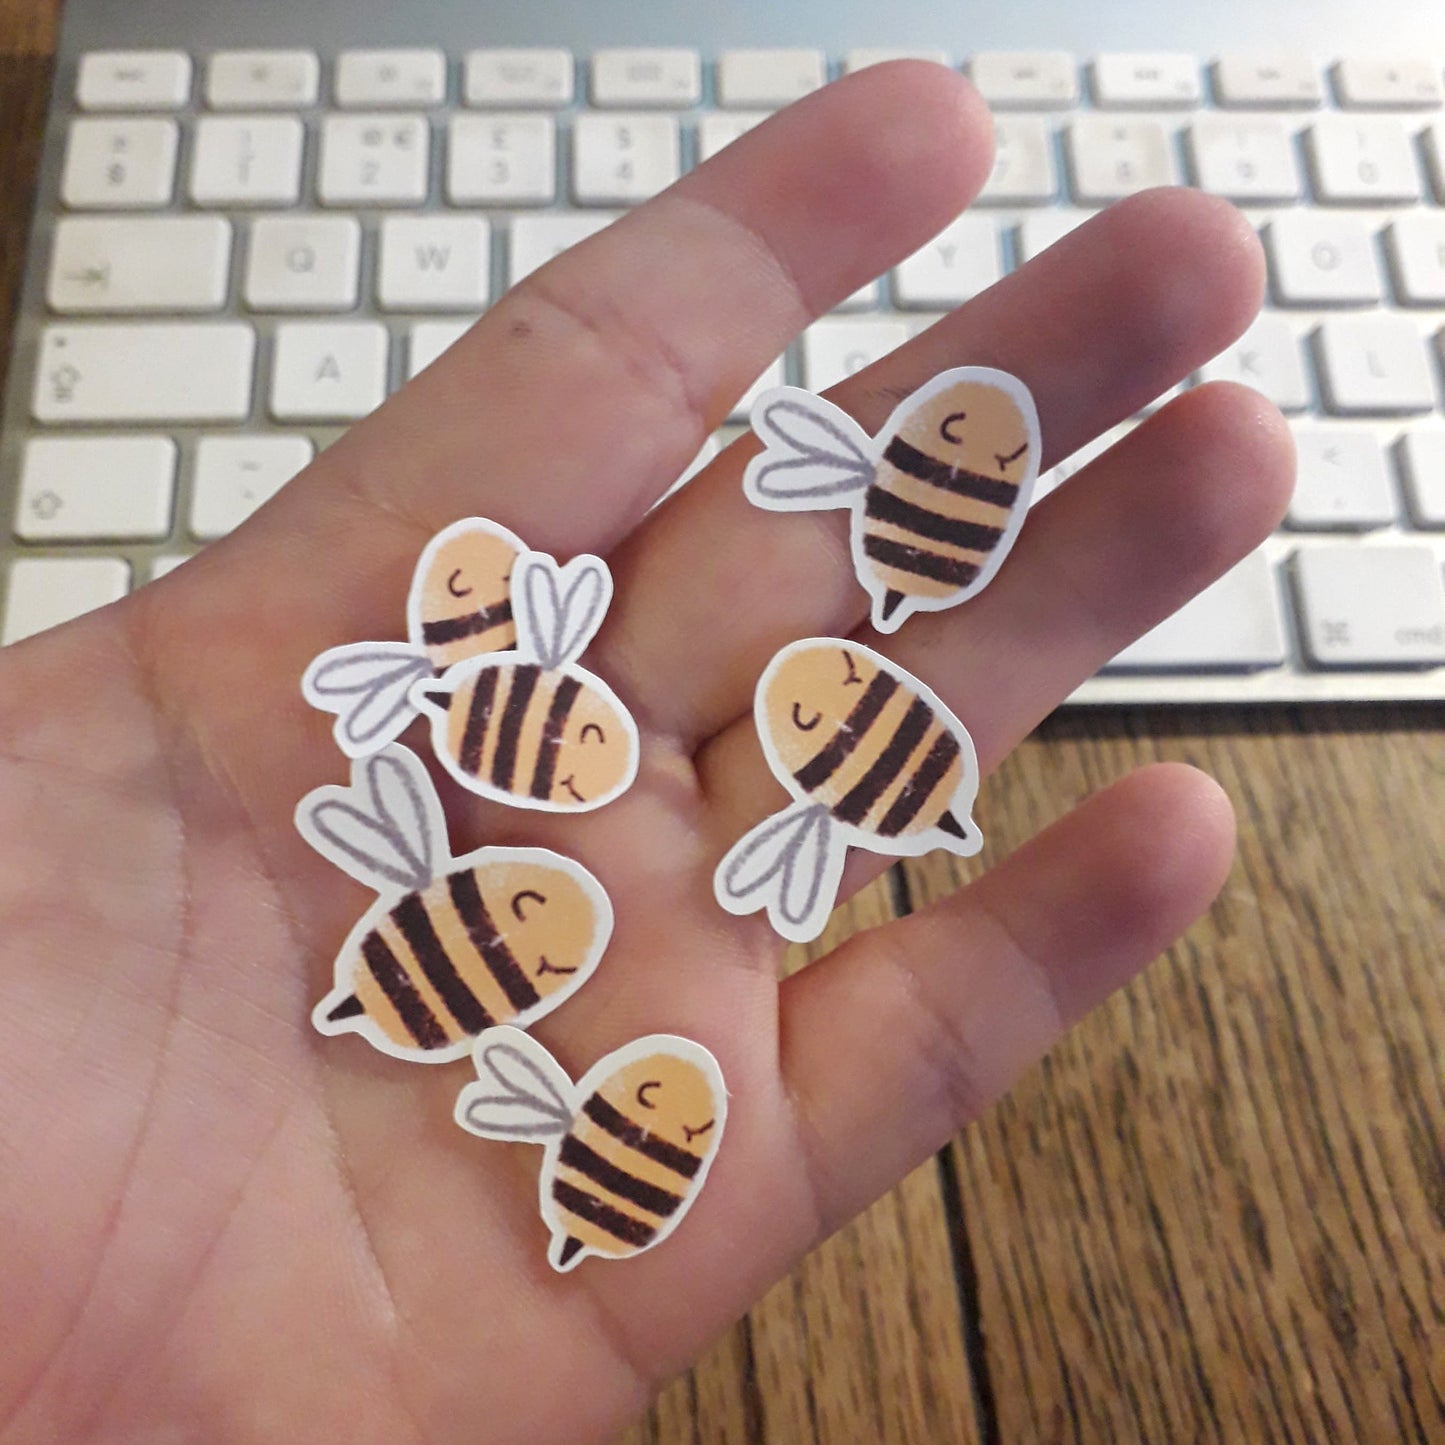 My Bee Hive Sticker Pack!  (20 mixed size bee stickers, tech stickers, laptop sticker, cute) Waterproof Vinyl Stickers, mixed gloss/matte